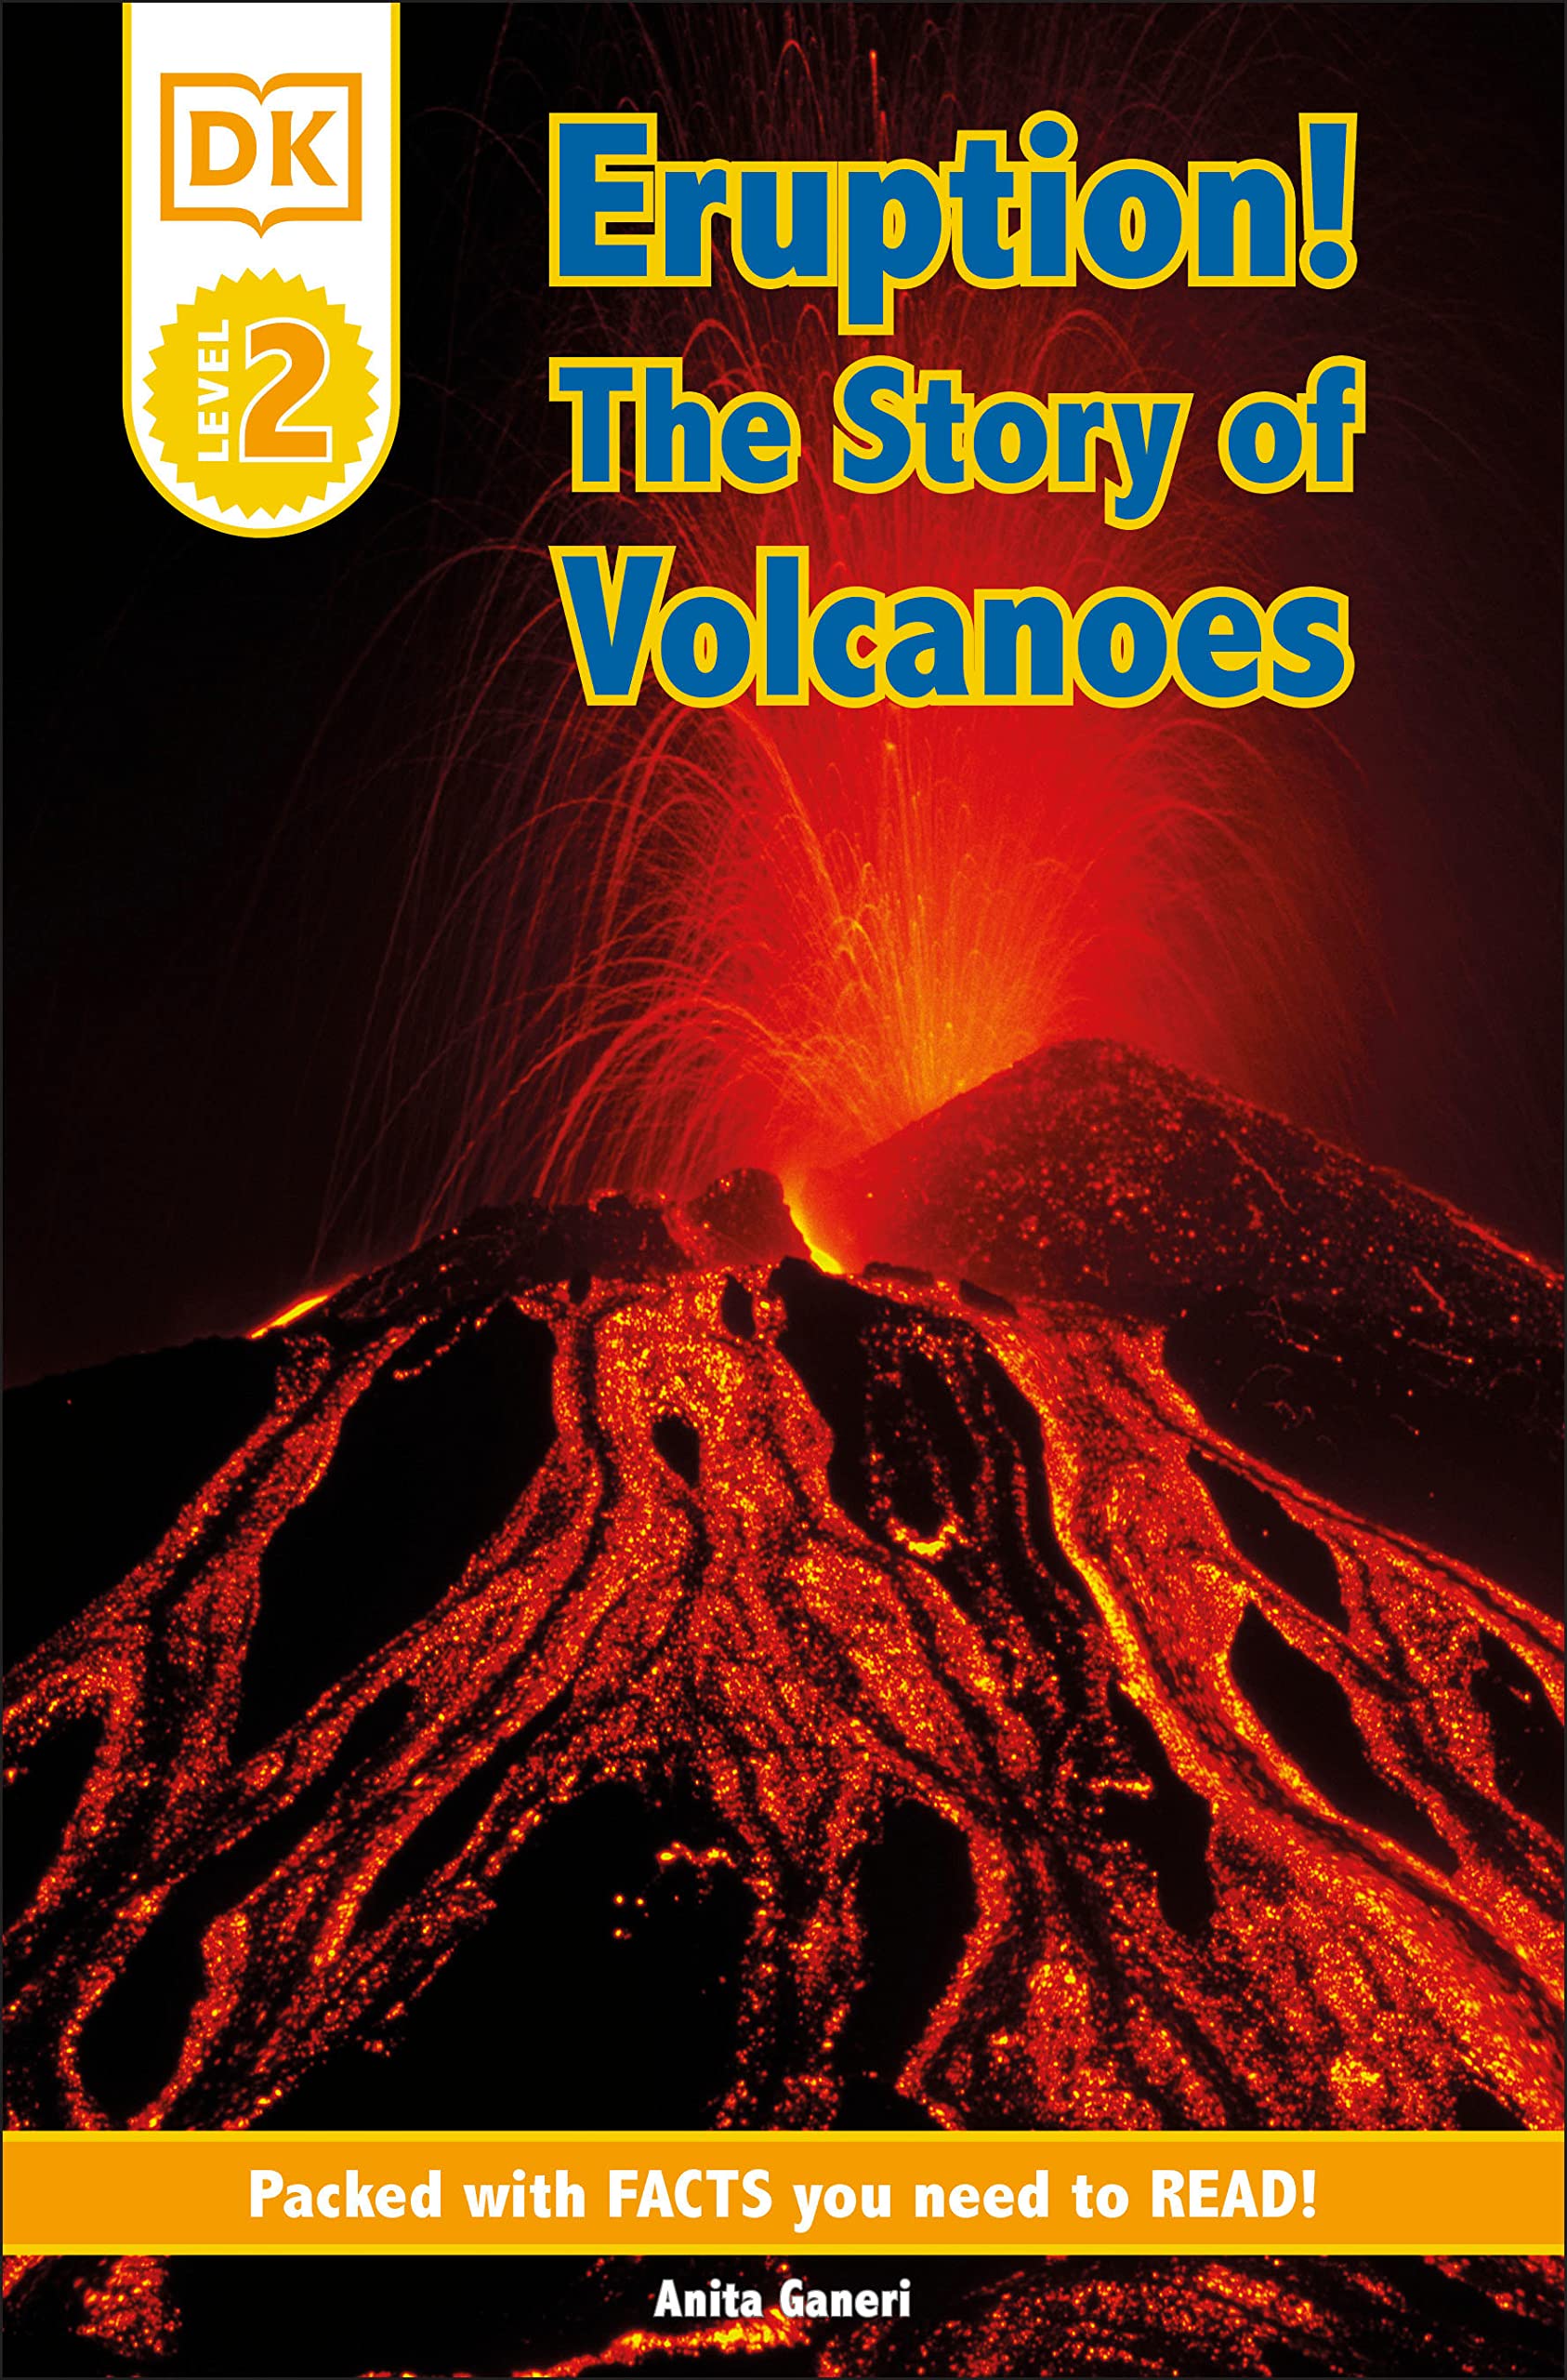 DK Readers: Eruption!: The Story of Volcanoes